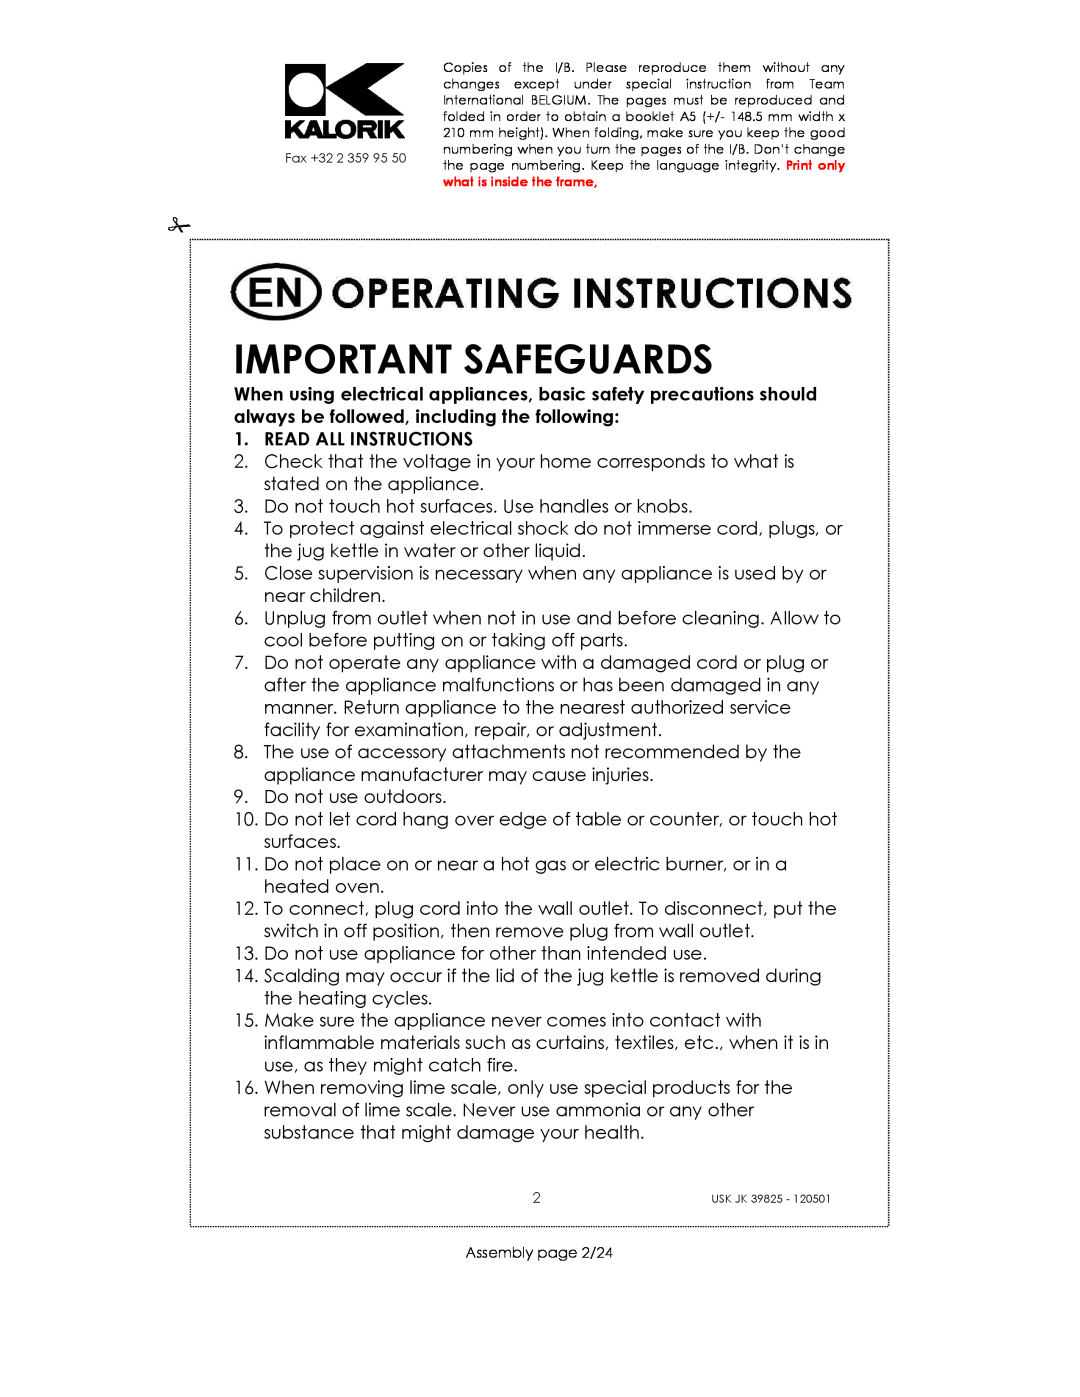 Kalorik JK 39825 manual Important Safeguards, Read All Instructions 